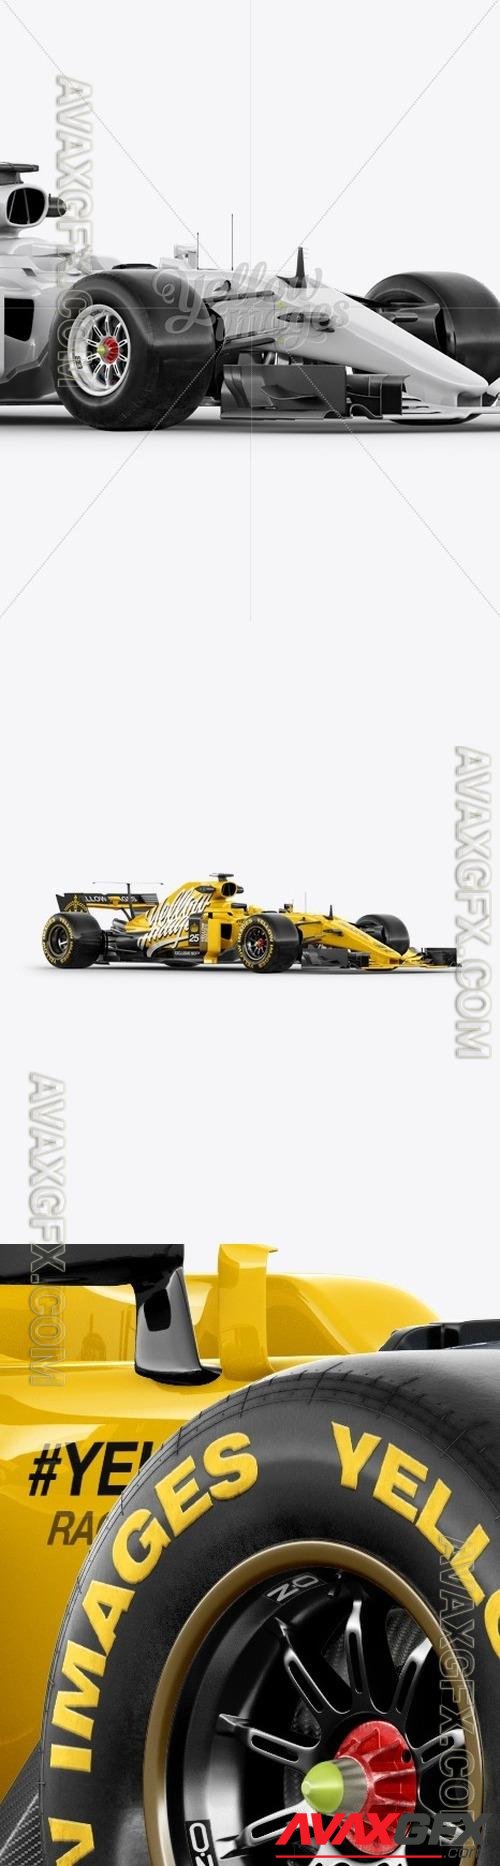 2017 Formula 1 Car Mockup - Half Side View 18149